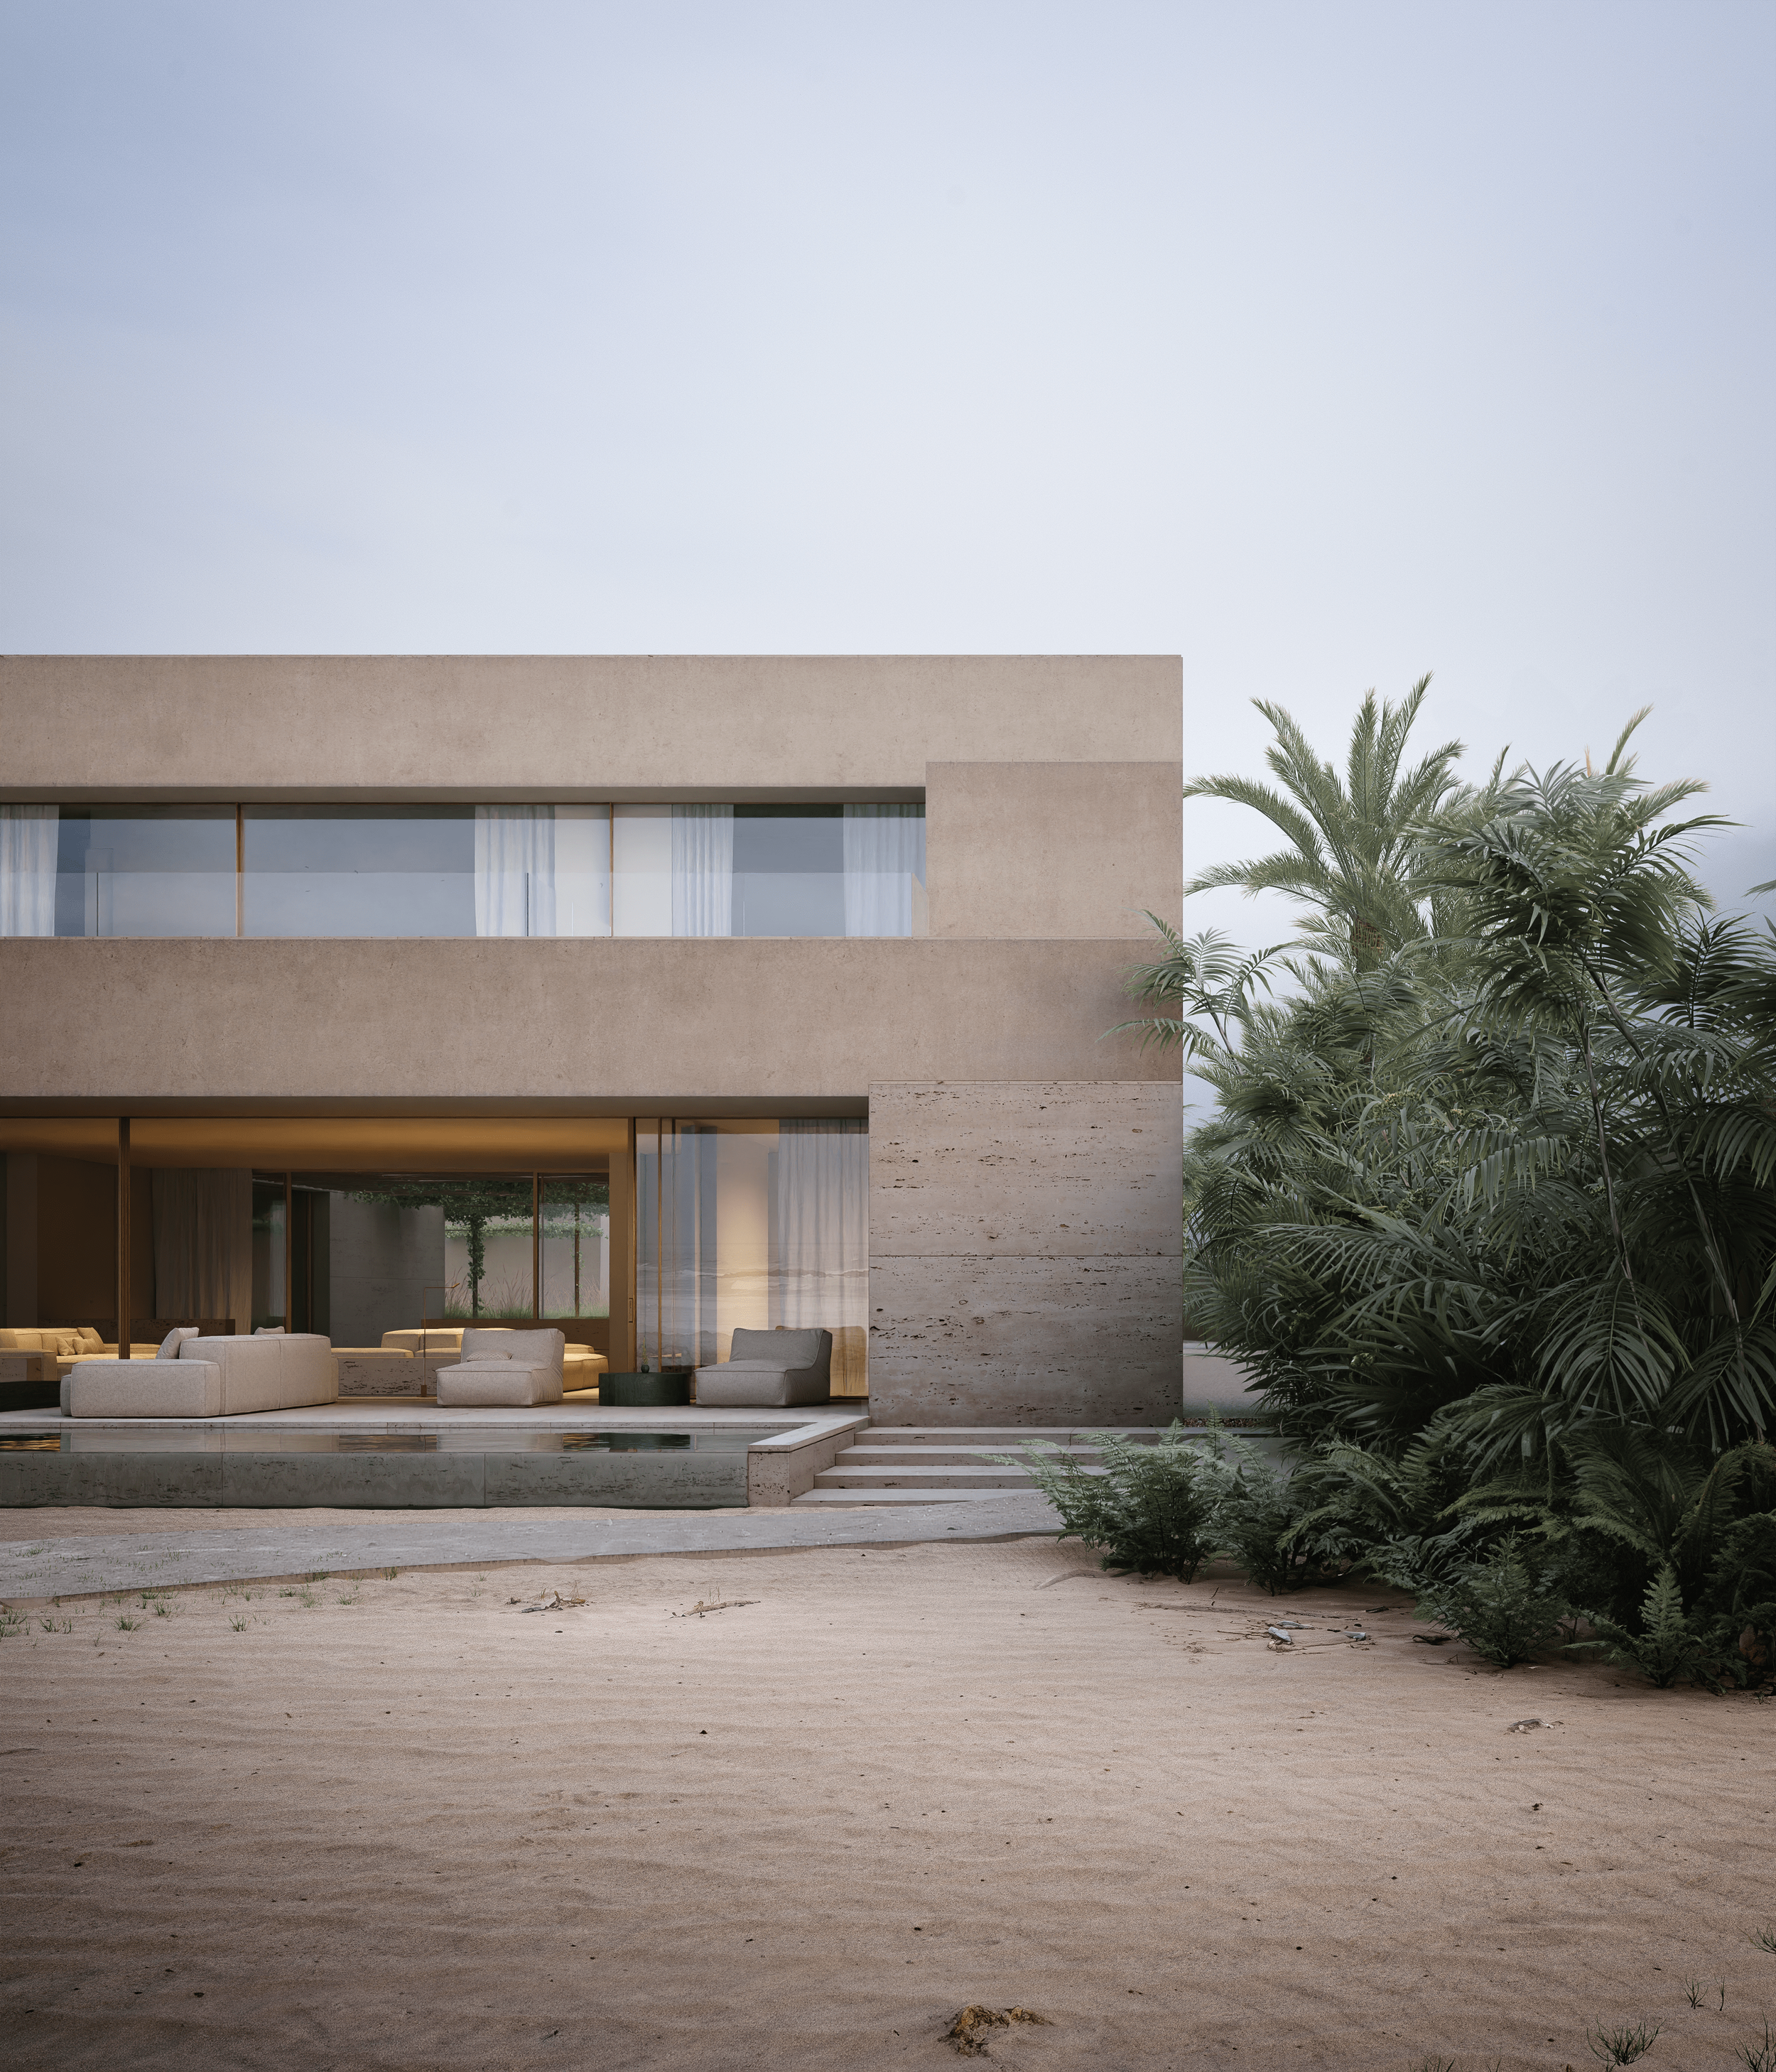 BEACH-HOUSE-ALHUMAIDHI-BALZAR-ARCHITECTS-KUWAIT-E-05-min.png